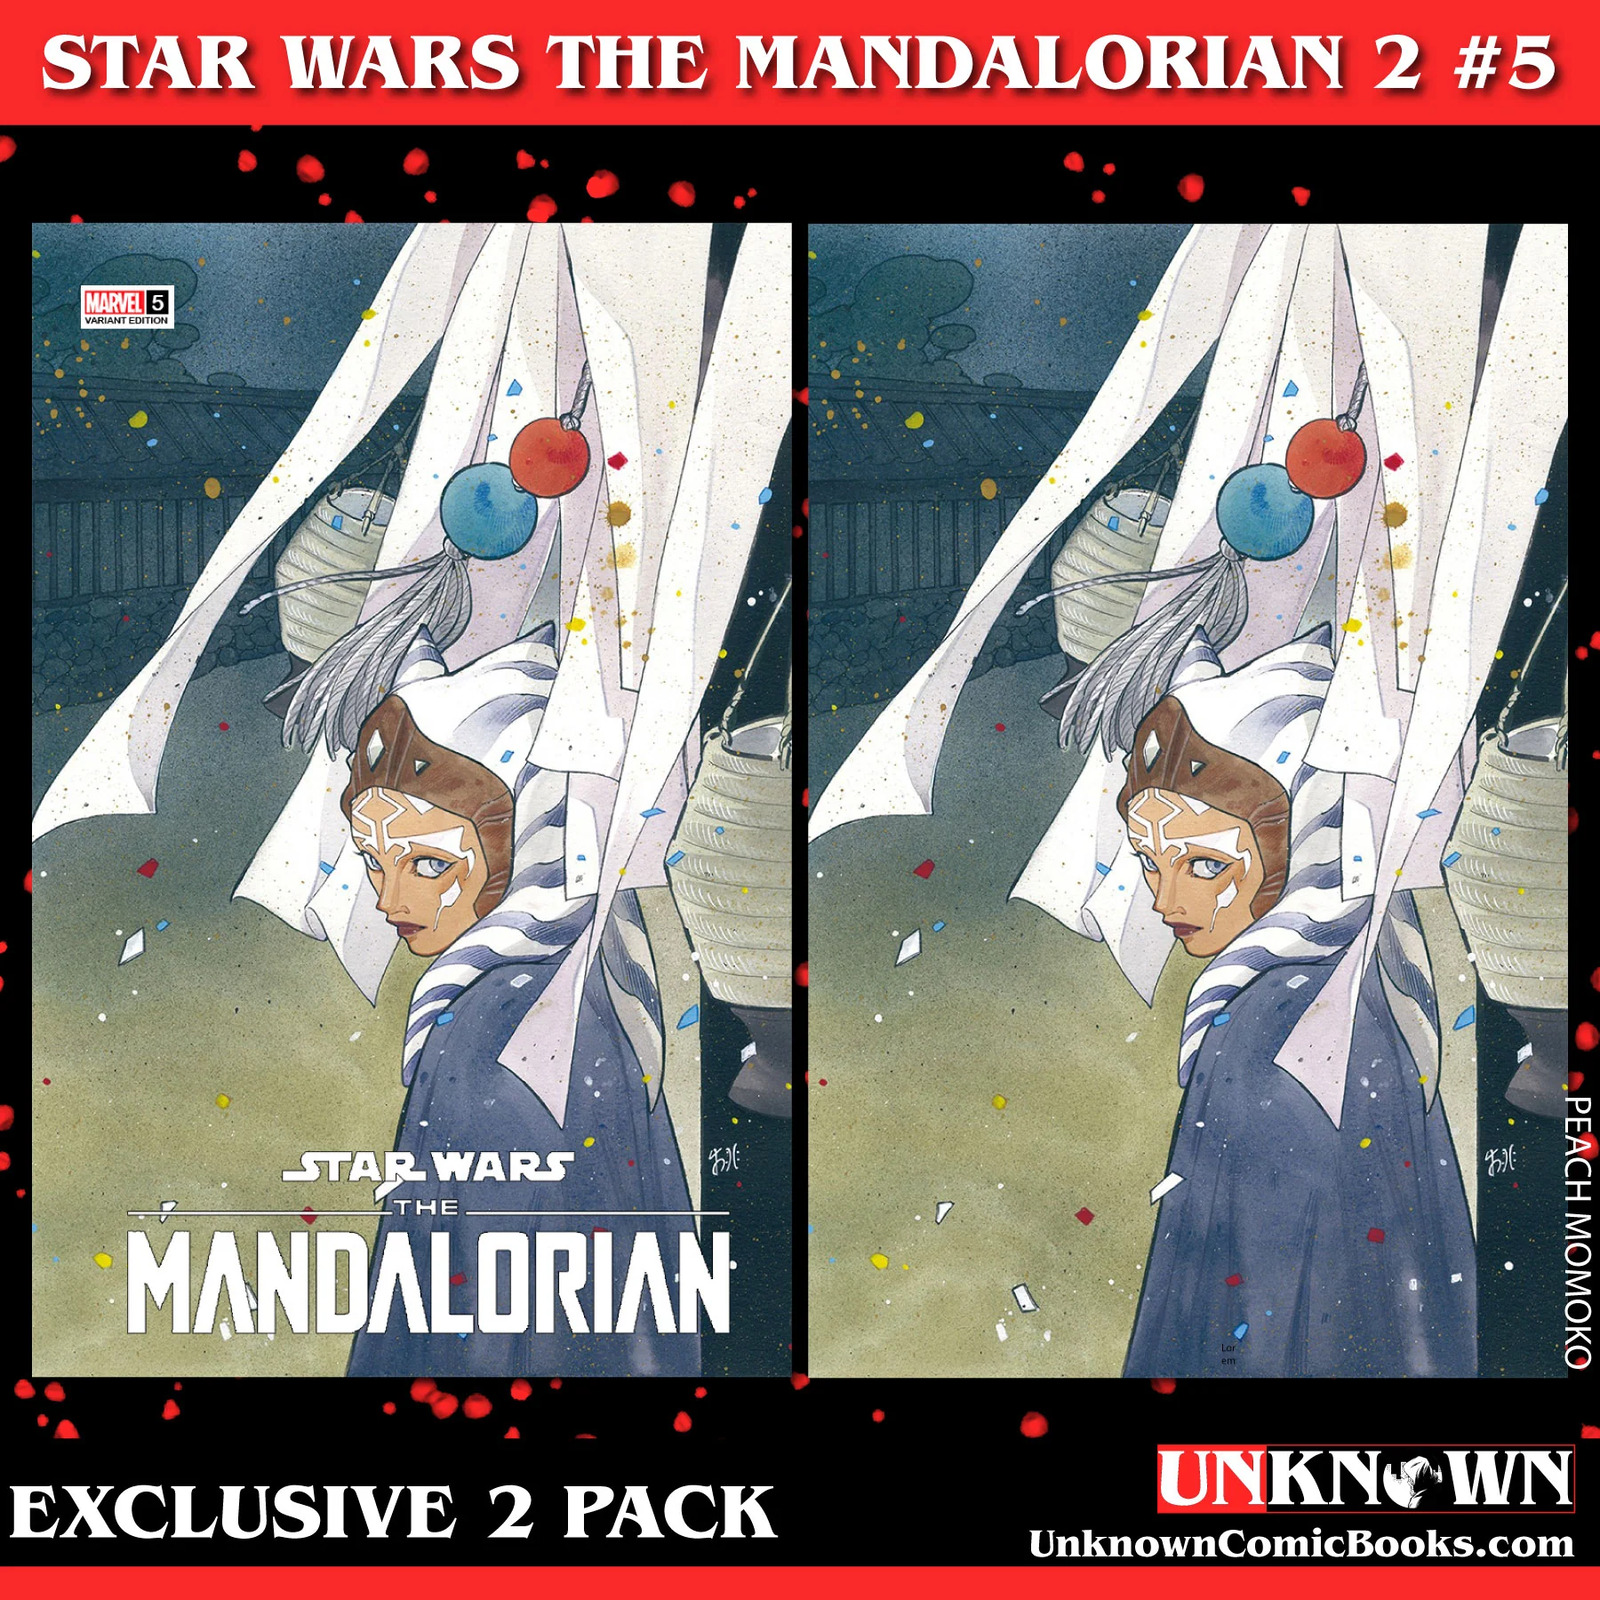 [2 PACK] STAR WARS: THE MANDALORIAN SEASON 2 #5 UNKNOWN COMICS PEACH MOMOKO EXCL